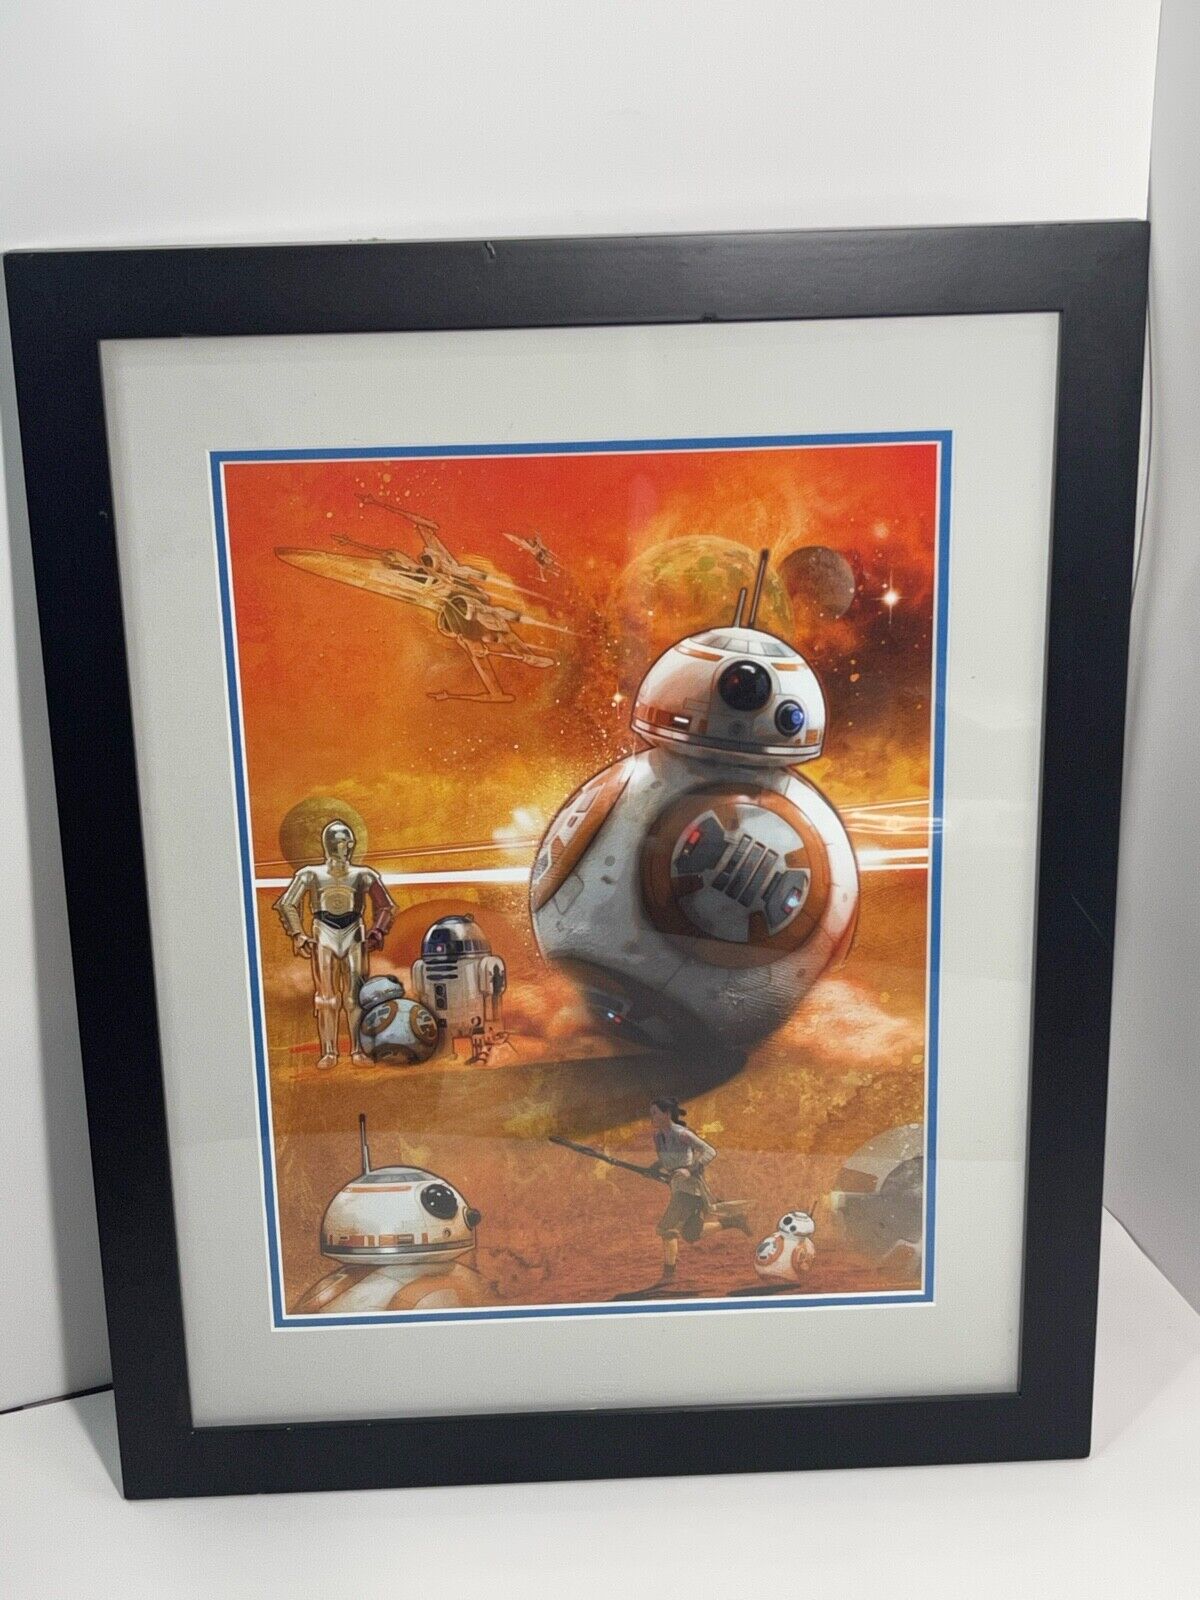 Disney Artist Print Star Wars BB8 Framed & Matted 14”x10.5” Print 20”x16” Framed